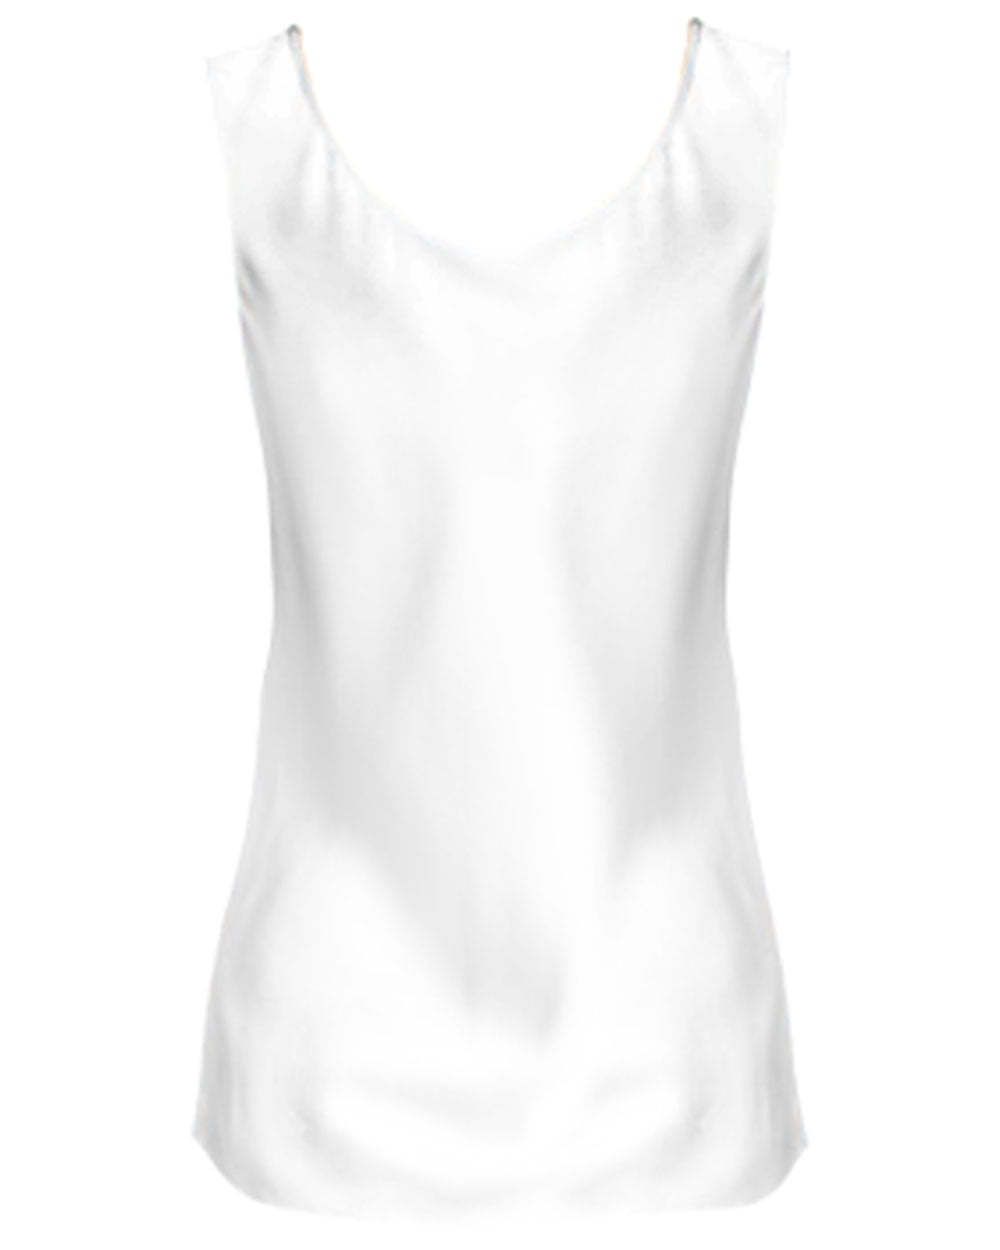 White Basic Silk Camisole